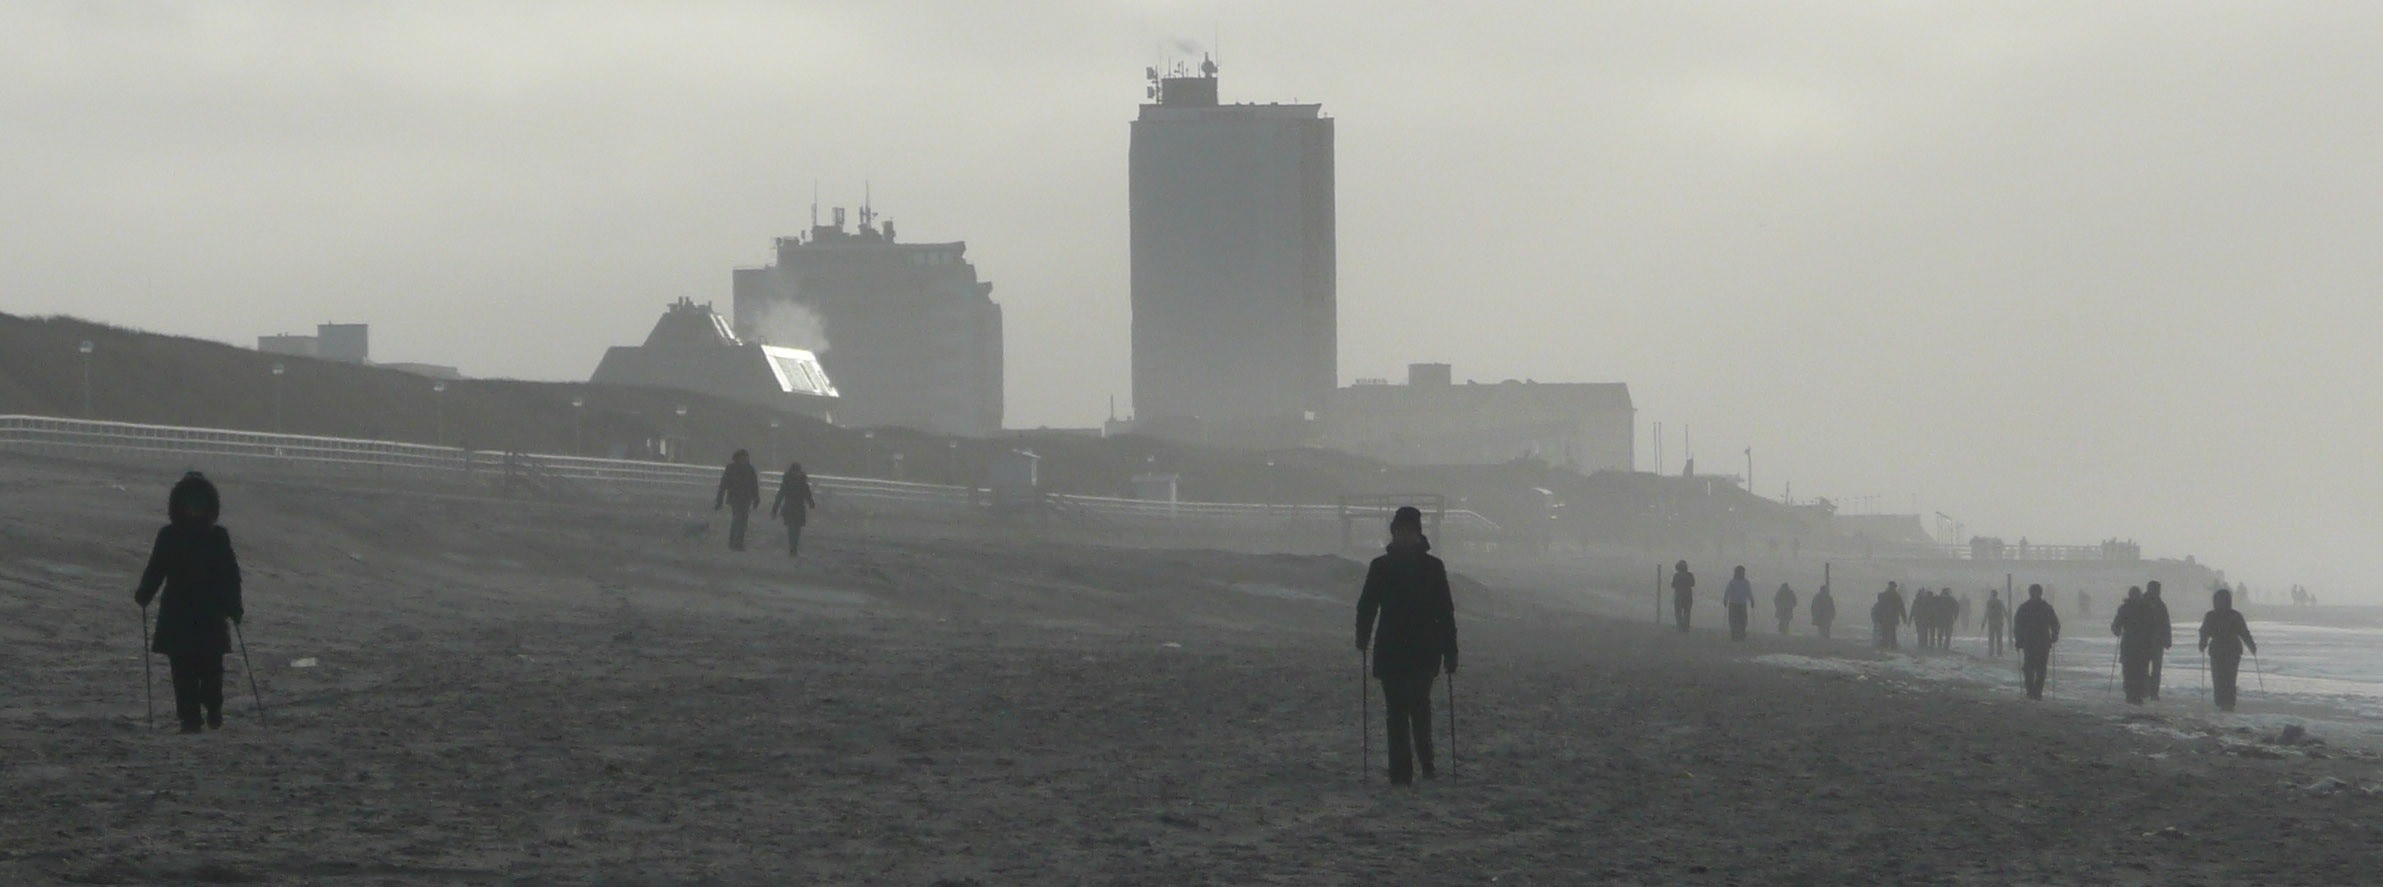 people walking on a foggy beach